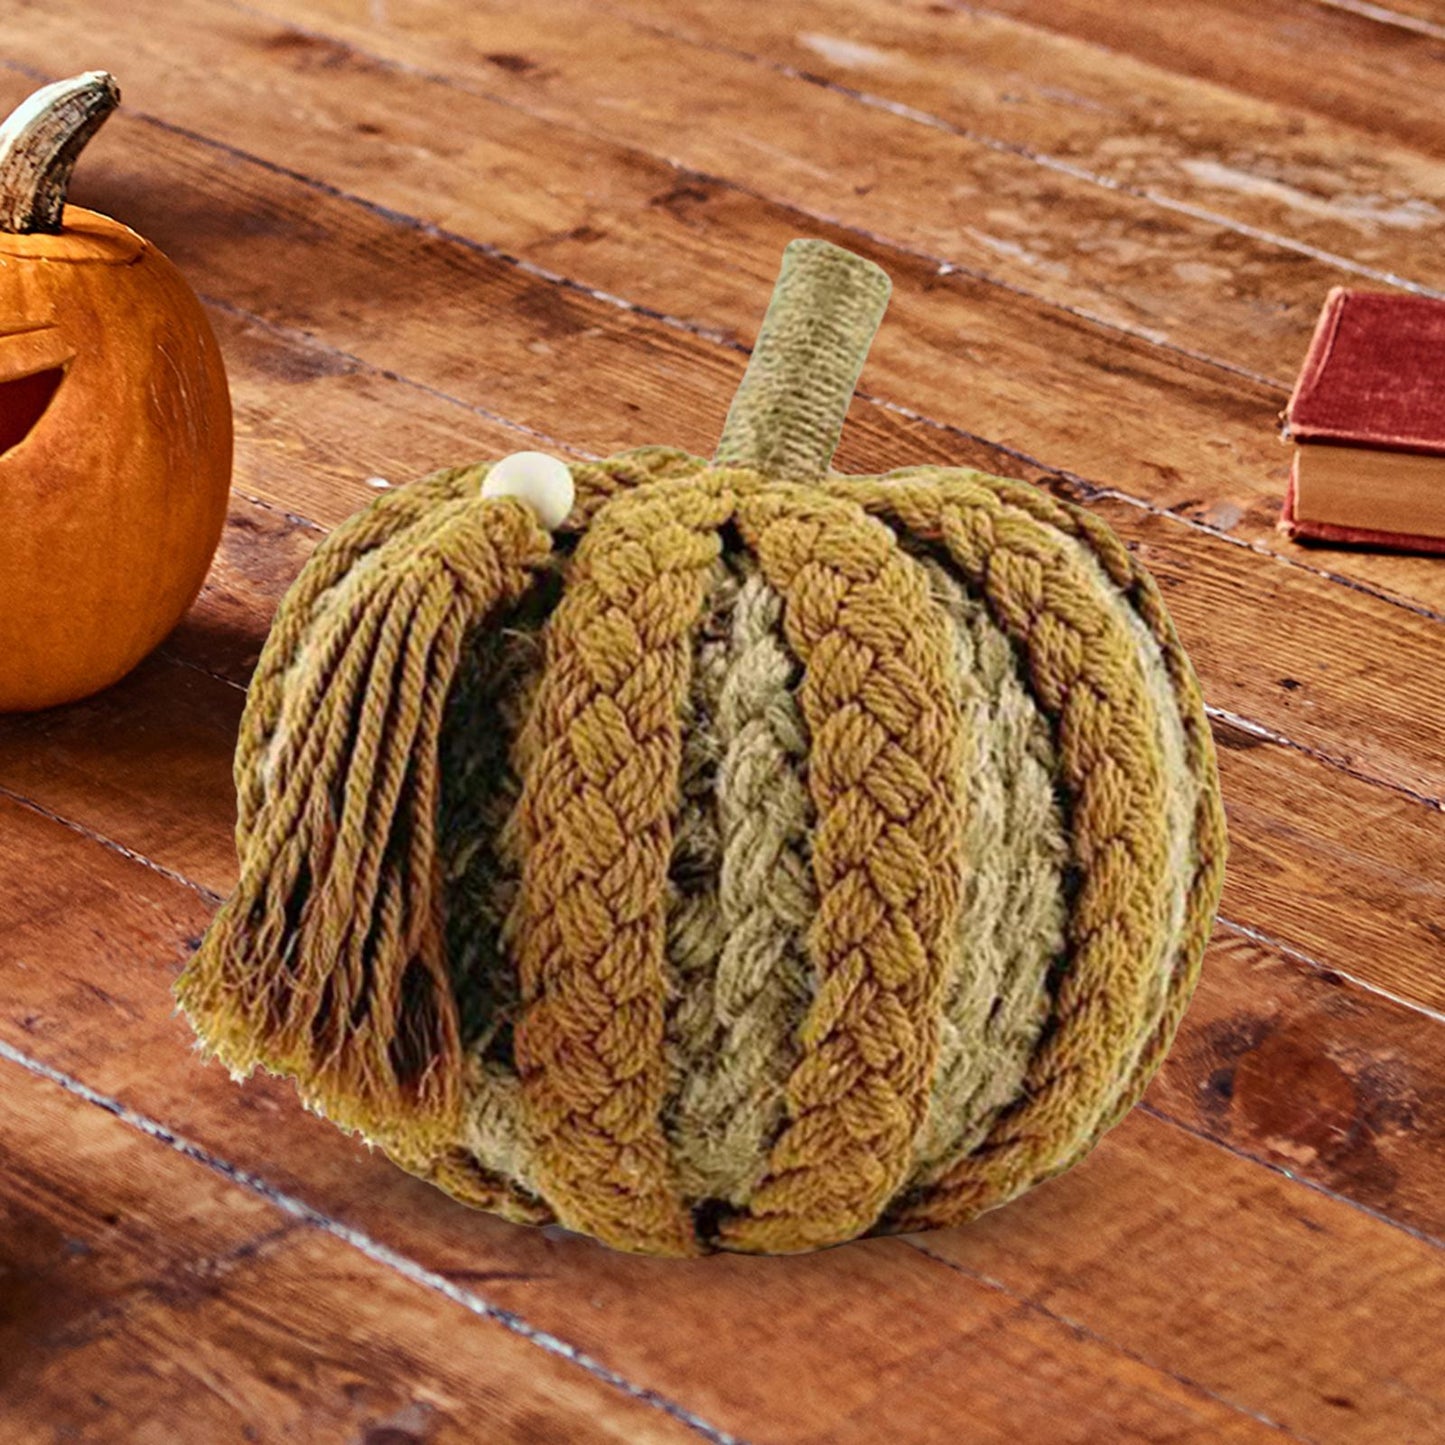 Rustic Harvest Cotton Pumpkins | Cozy Thanksgiving & Fall Home Decor | Handwoven Autumn Centerpieces